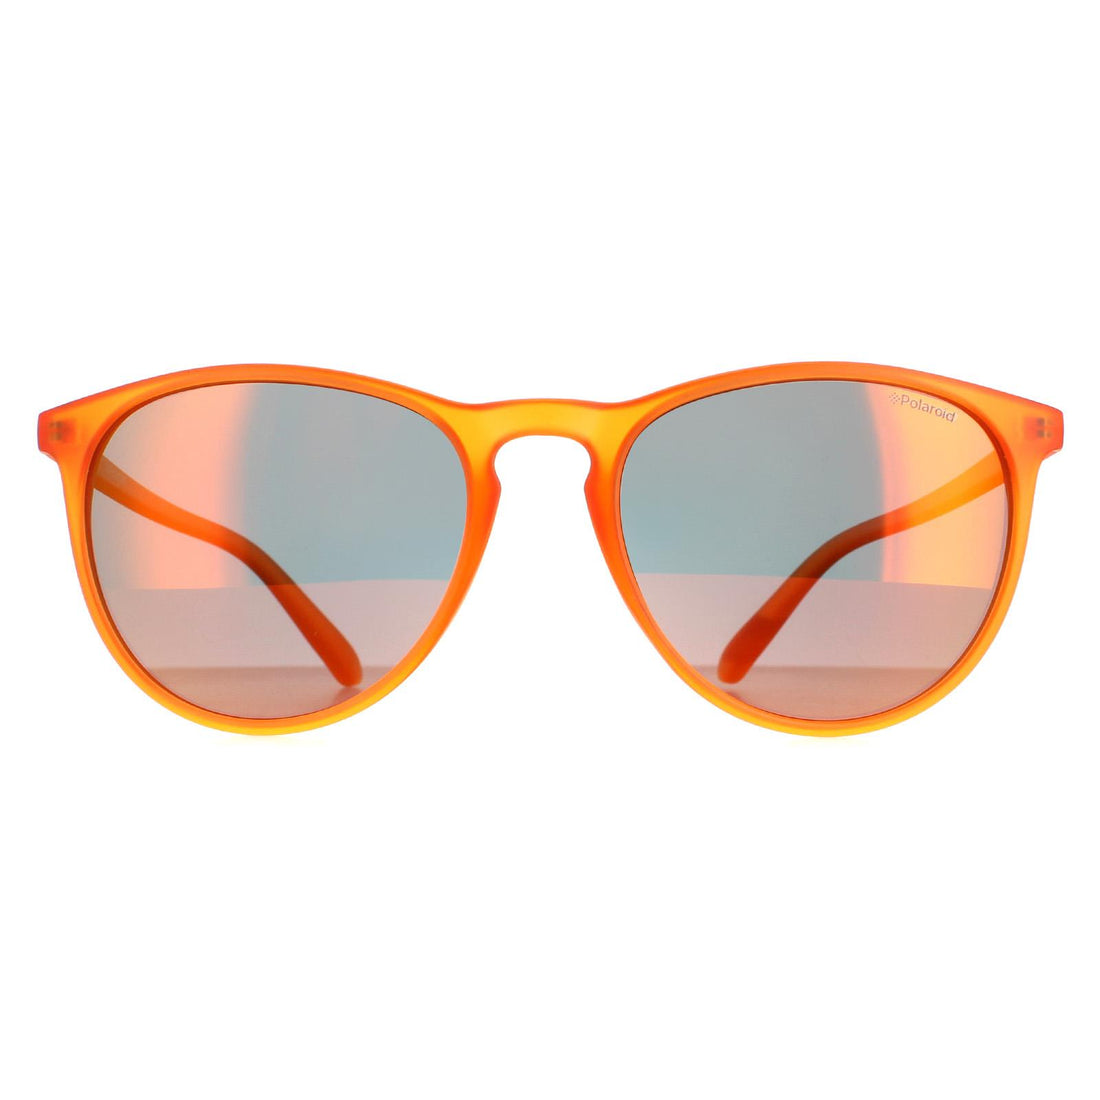 Polaroid PLD 6003/N Sunglasses Orange / Orange Mirror Polarized